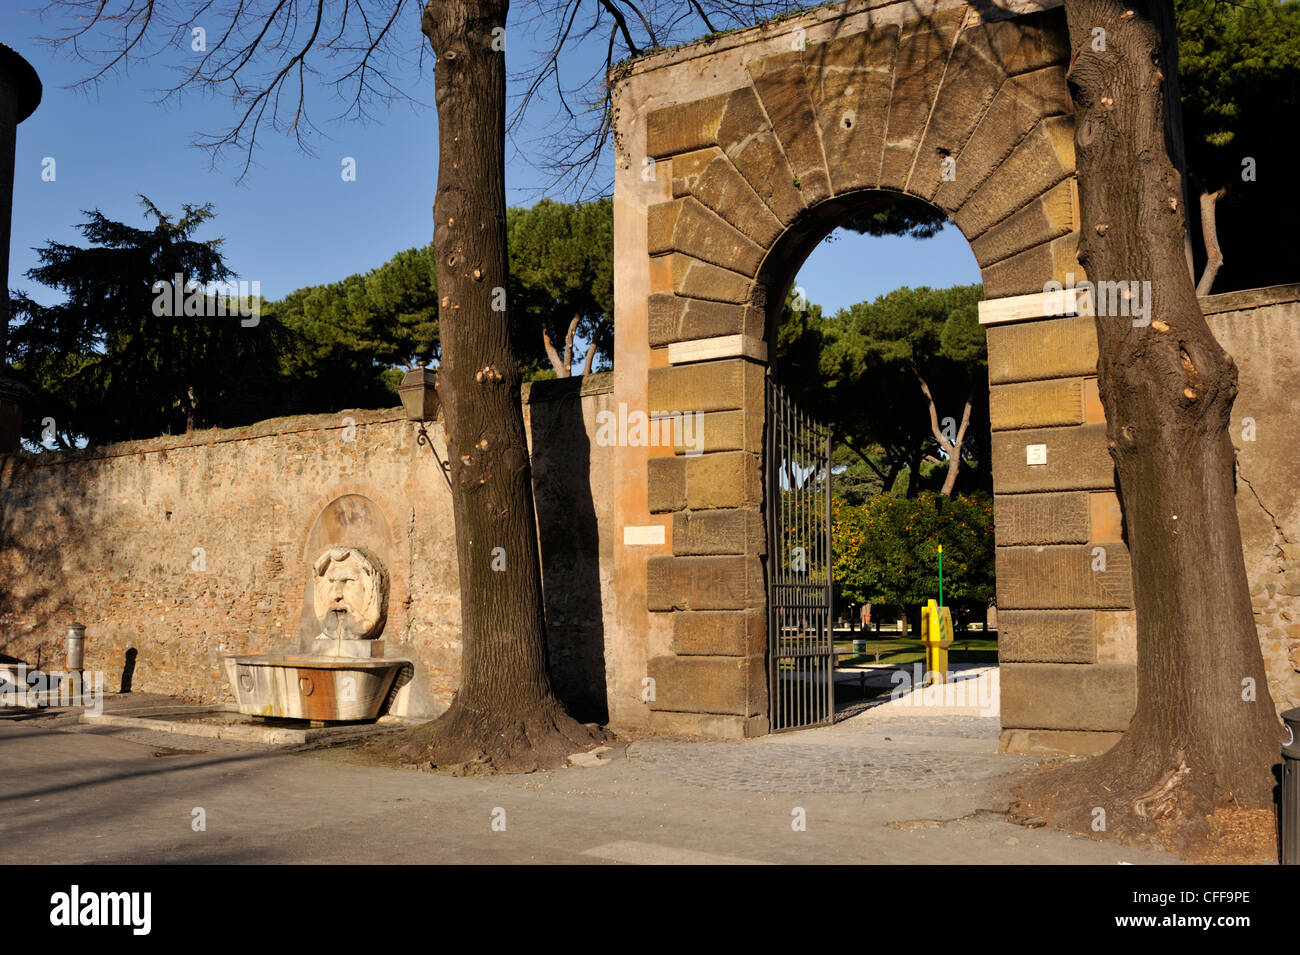 Italy, Rome, Aventino, Giardino degli Aranci, gardens entrance gate Stock Photo